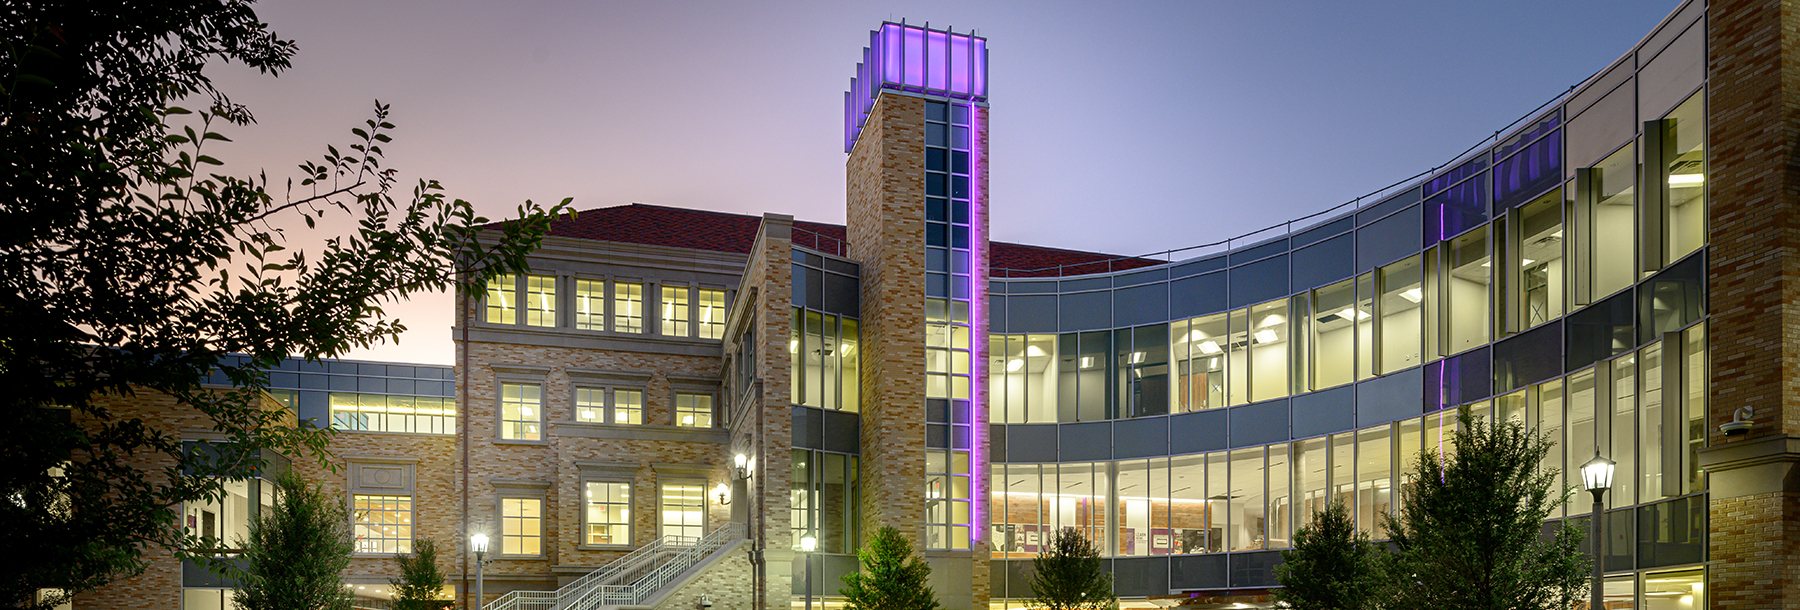 Section Image: Neeley School of Business 